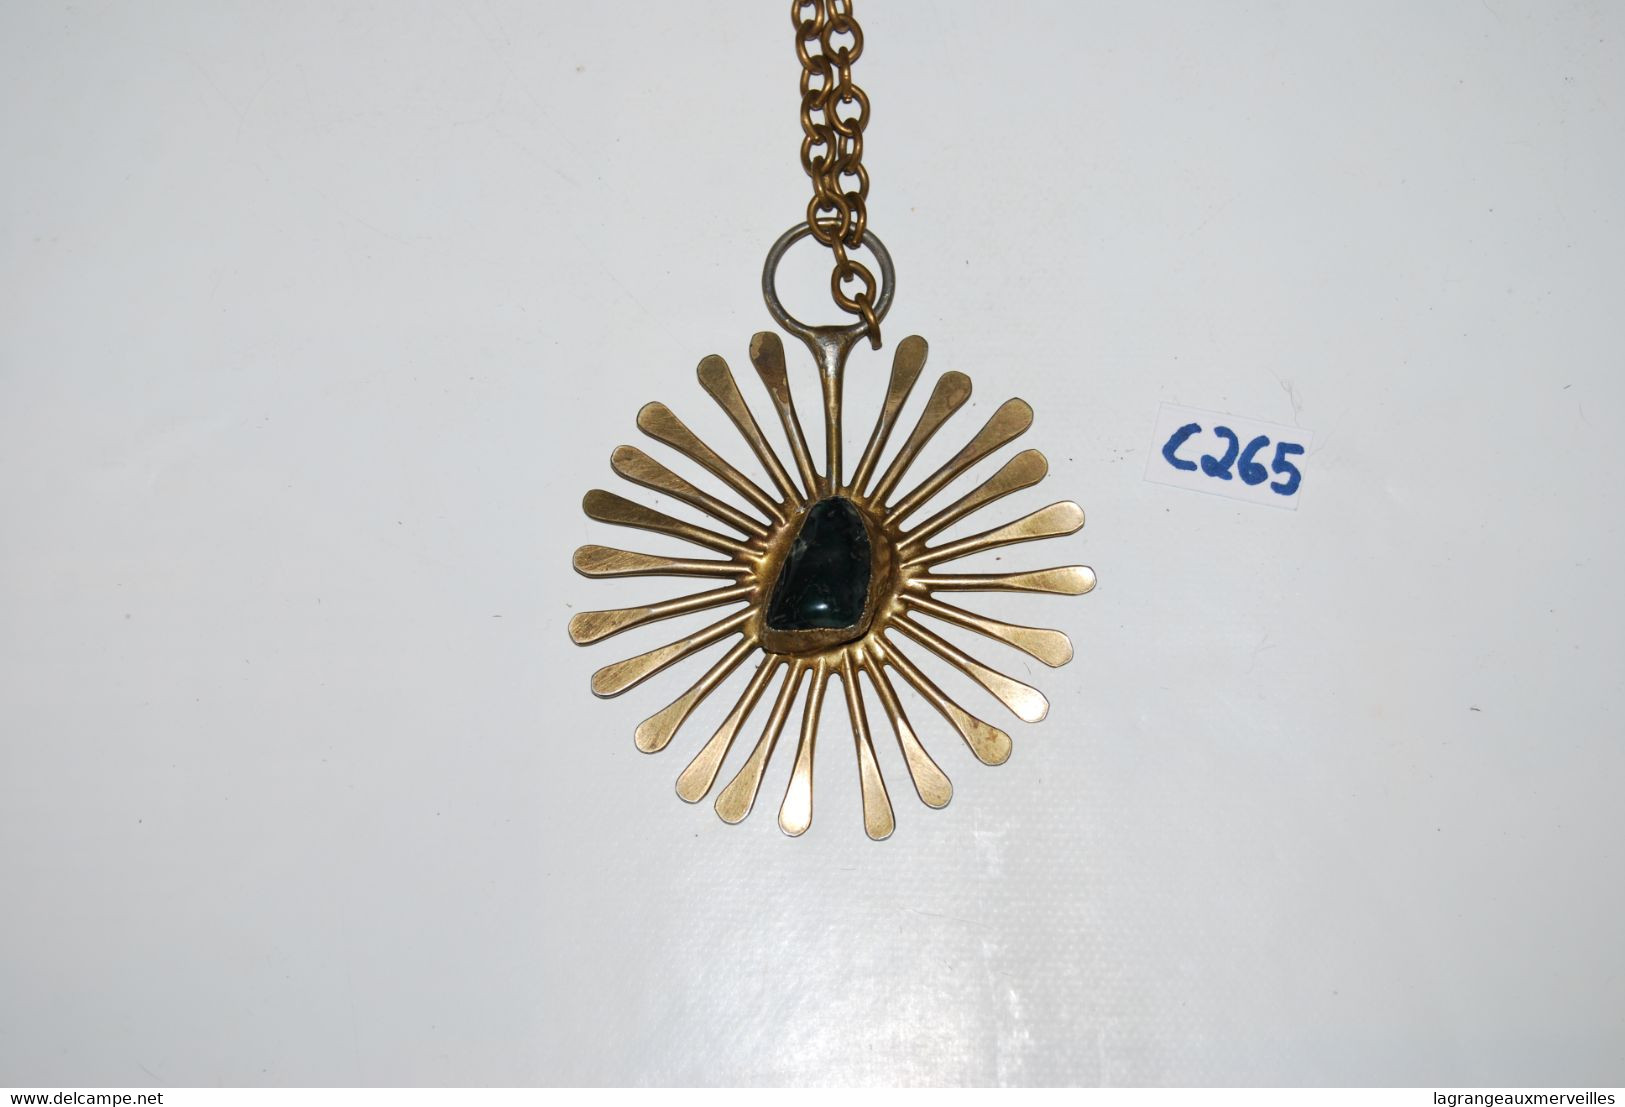 C265 Ancien Collier Moderniste - Jacob Hull Design Denmark - B+D - Rare Design Vintage - Colliers/Chaînes